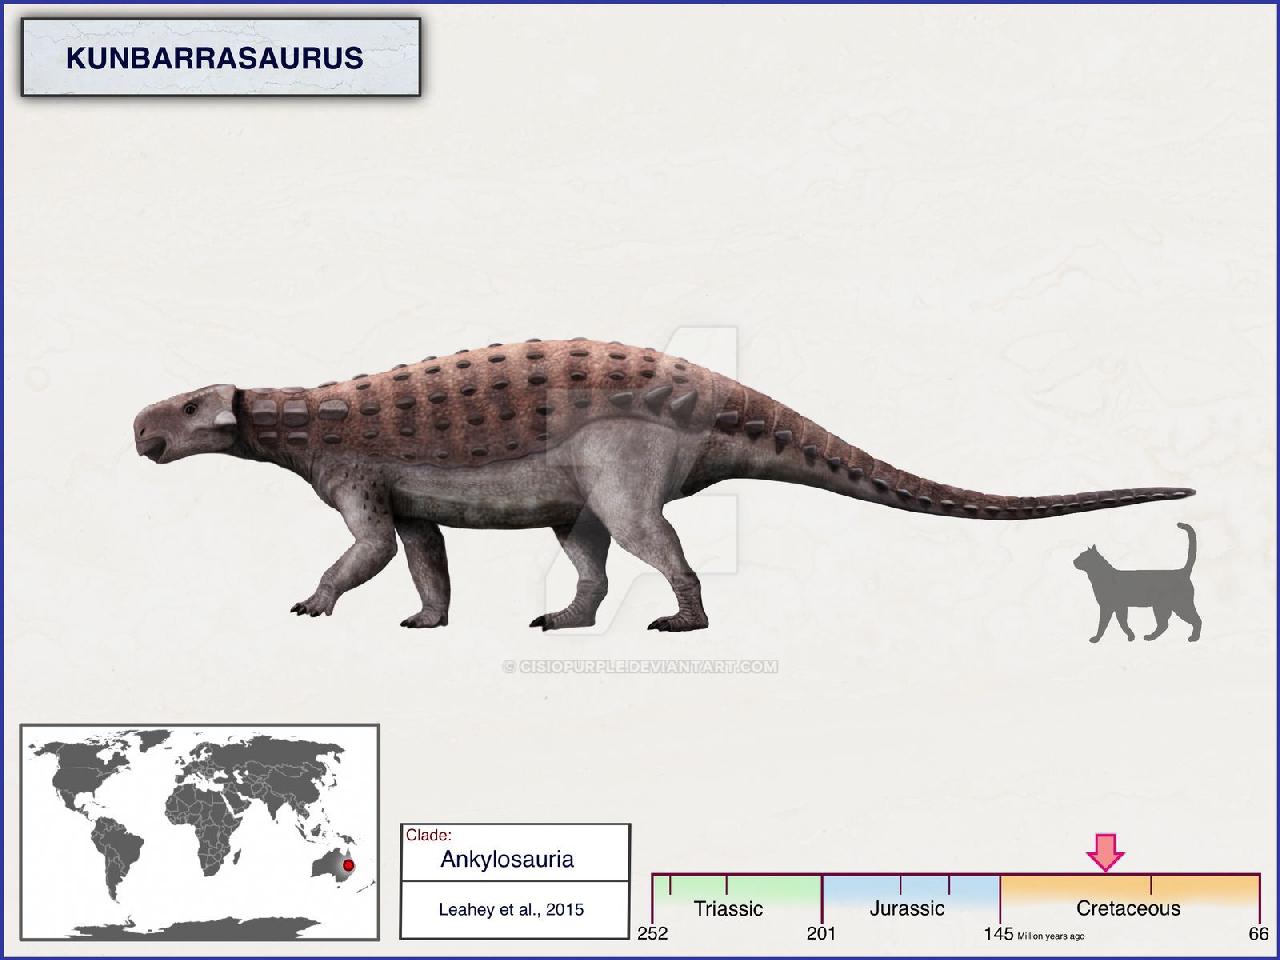 Kunbarrasaurus